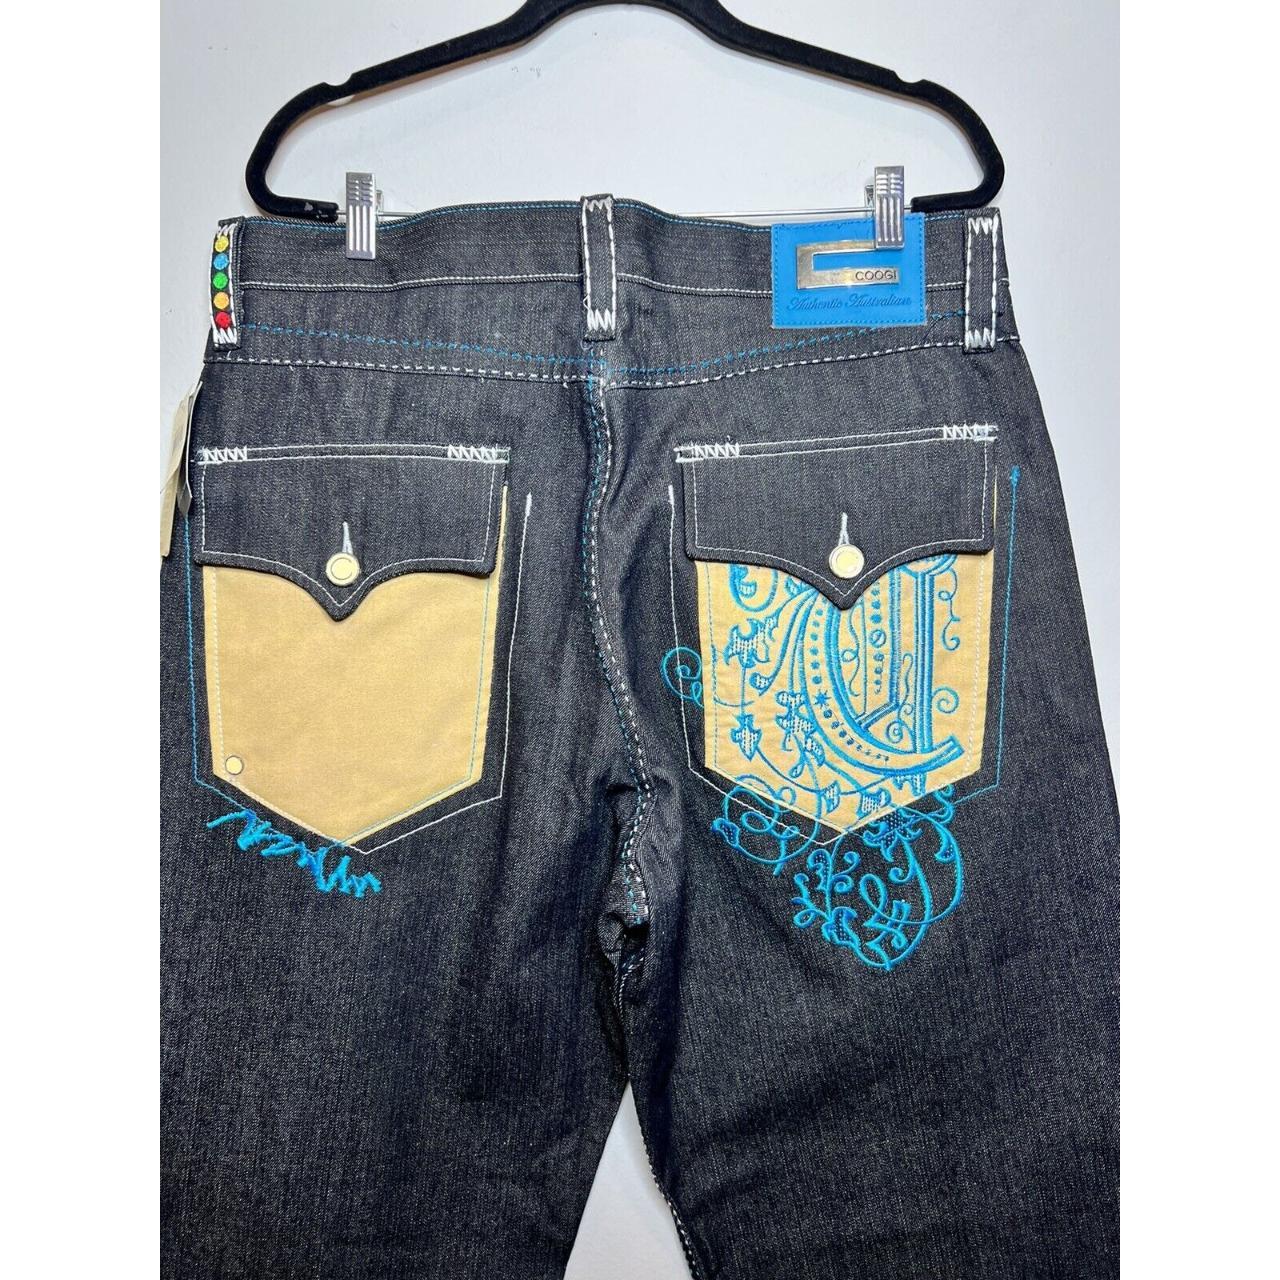 COOGI Vintage Jeans Pants Trousers Hype Navy Blue Logo Colorful Rainbow Sz  36/34